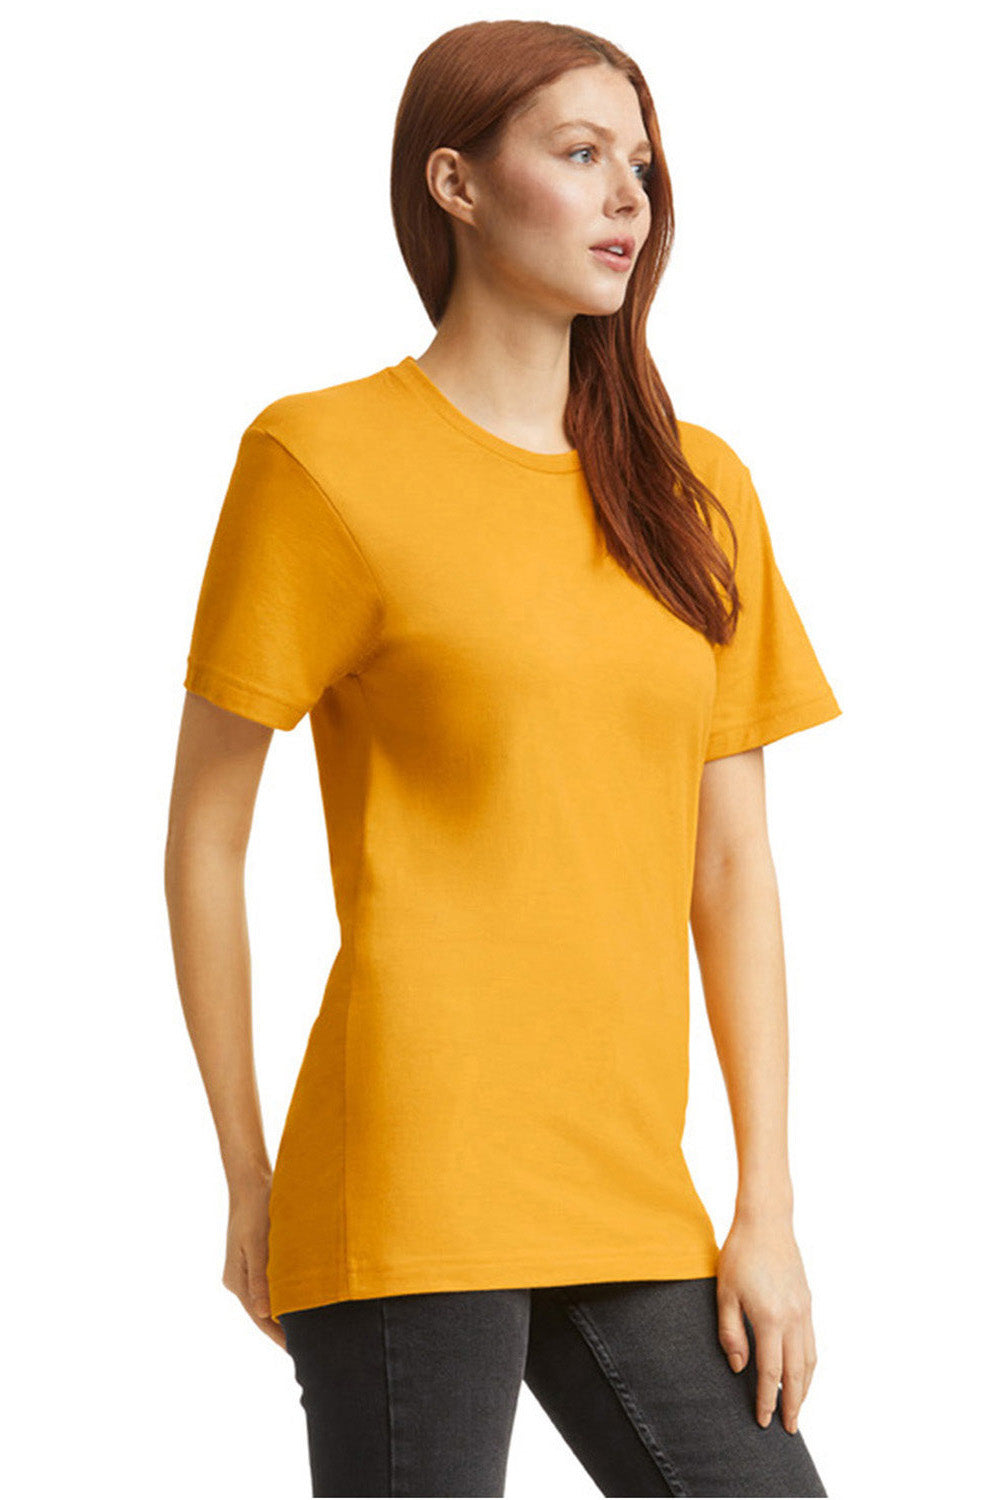 American Apparel 2001CVC Mens CVC Short Sleeve Crewneck T-Shirt Heather Mustard Yellow Model Side